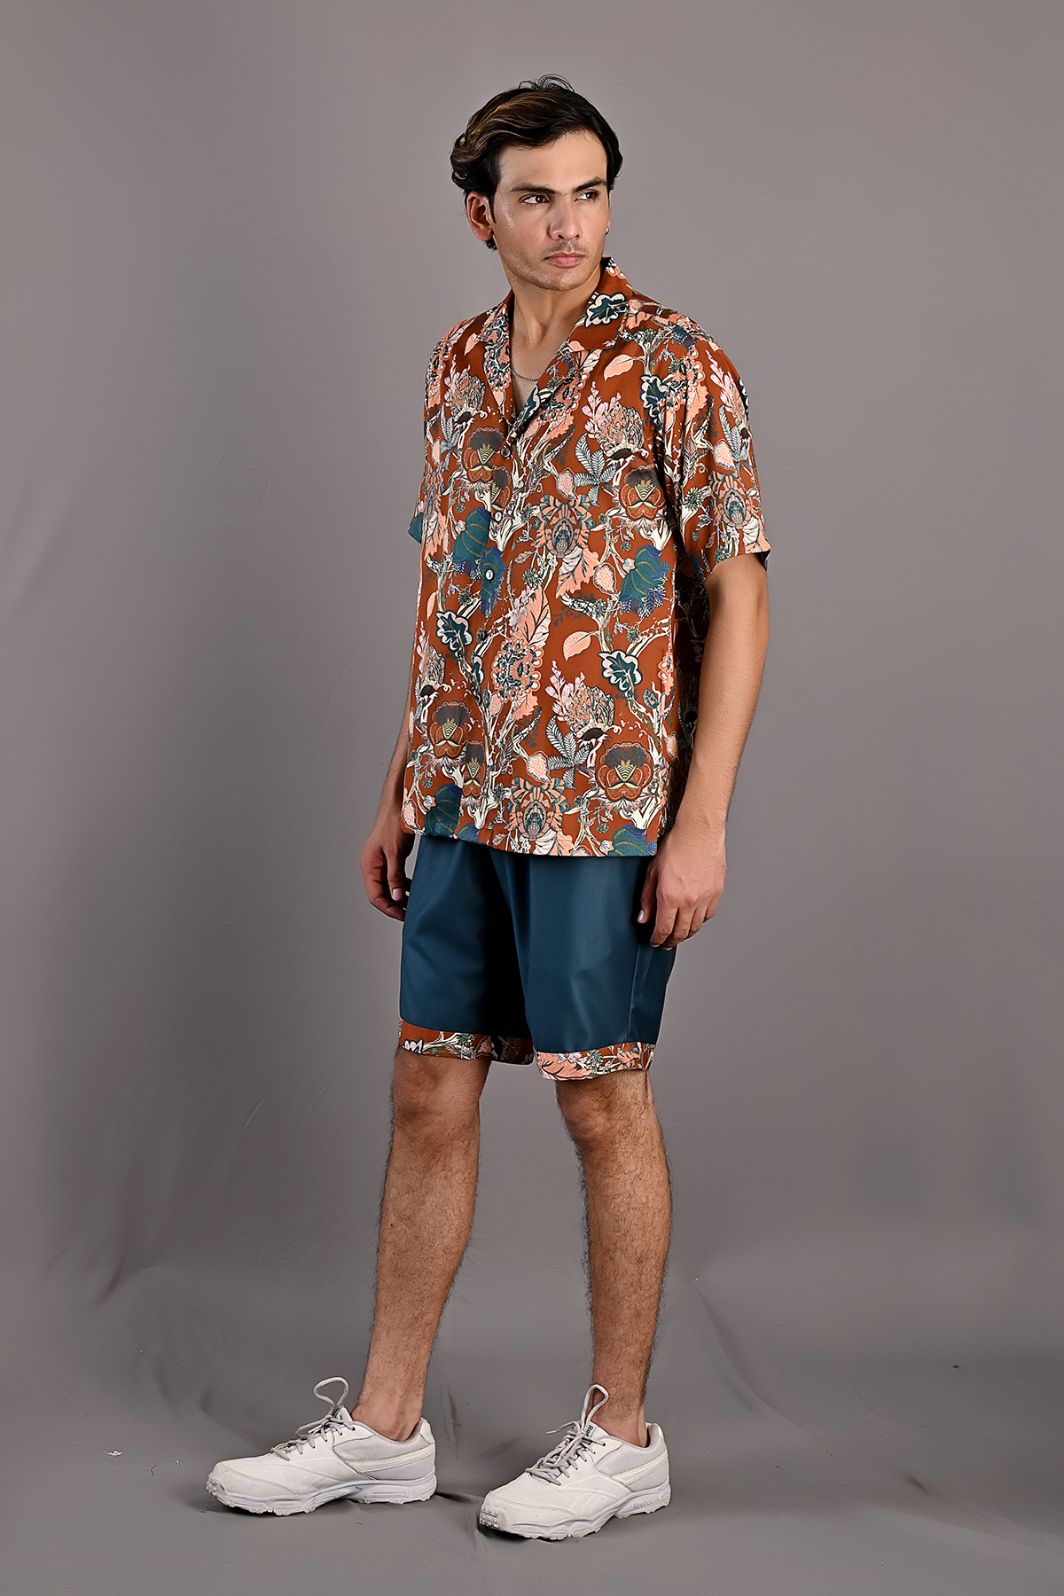 Oak- Maroon & Multi Printed Shirt with Teal Green Shorts Set